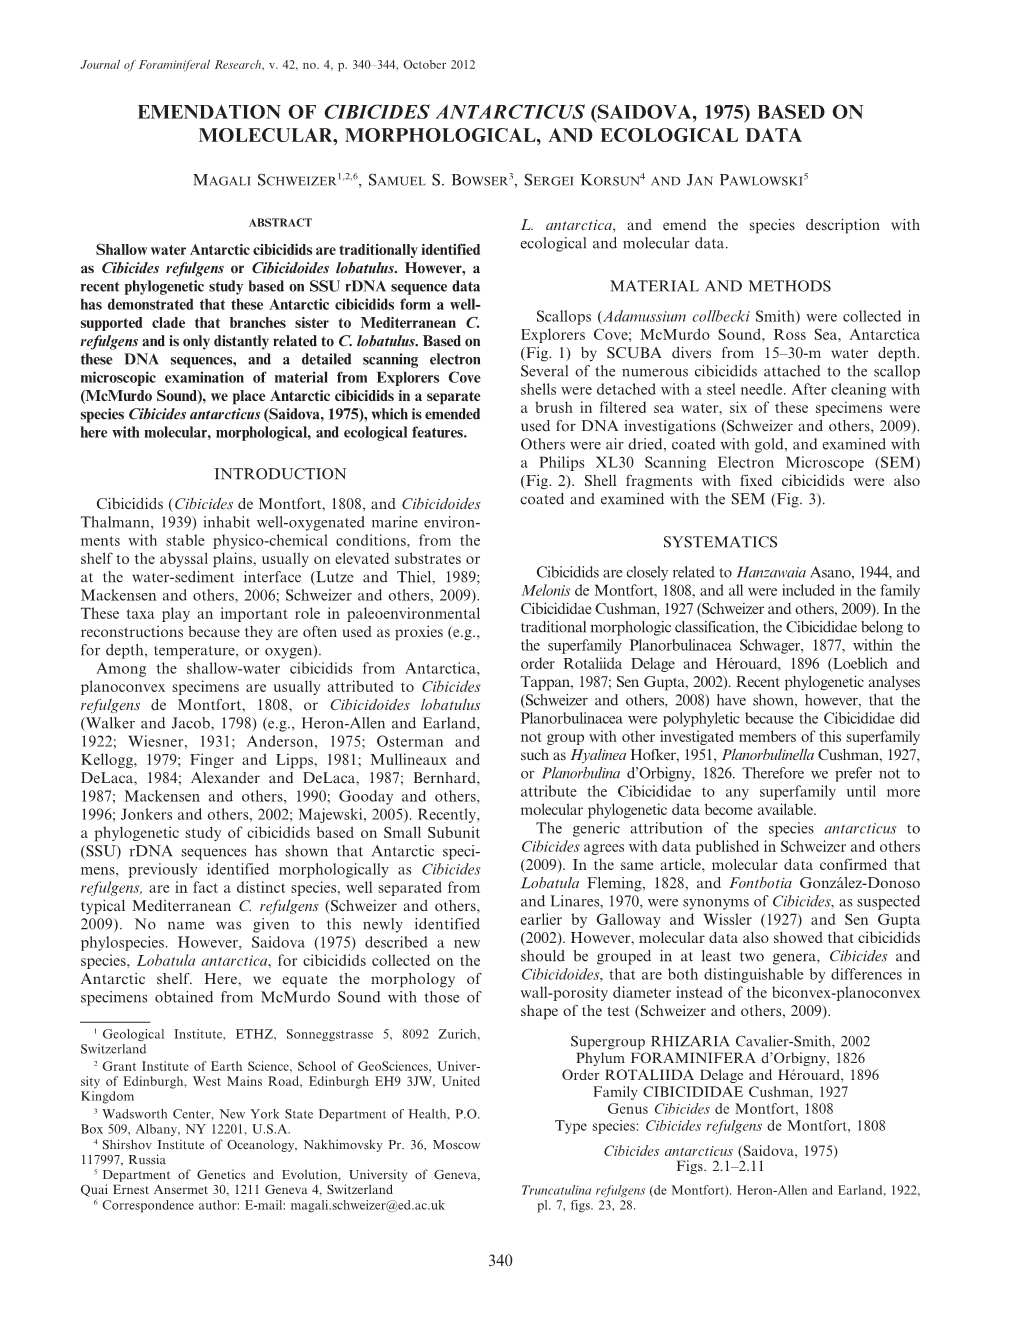 Emendation of Cibicides Antarcticus (Saidova, 1975) Based on Molecular, Morphological, and Ecological Data